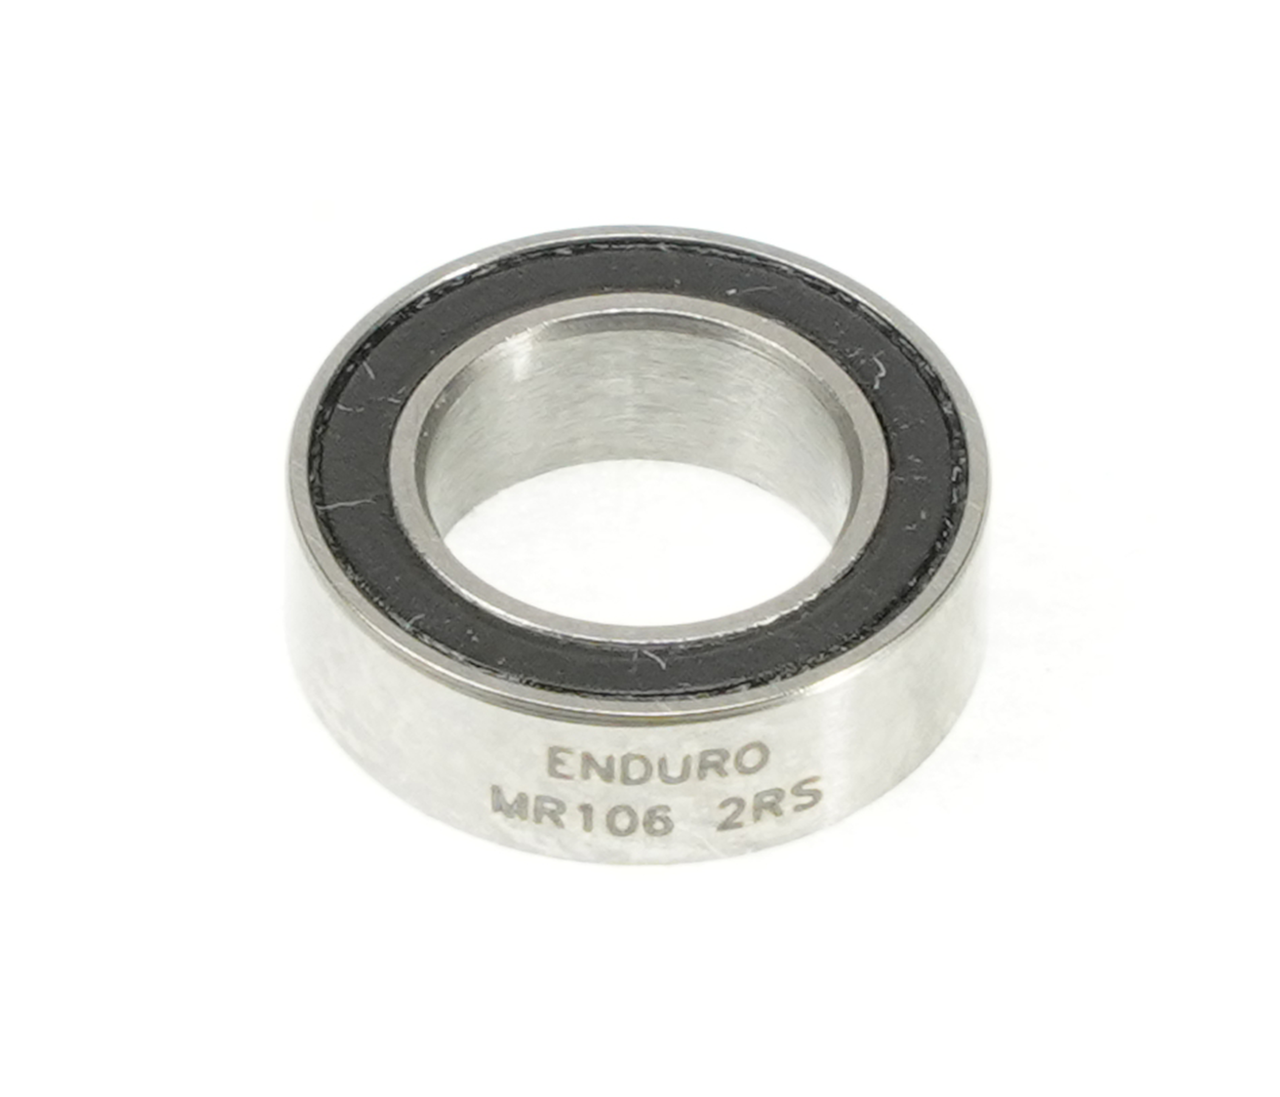 Enduro MR 106 2RS - ABEC-3 Radial Bearing (C3 Clearance) - 6mm x 10mm x 3mm